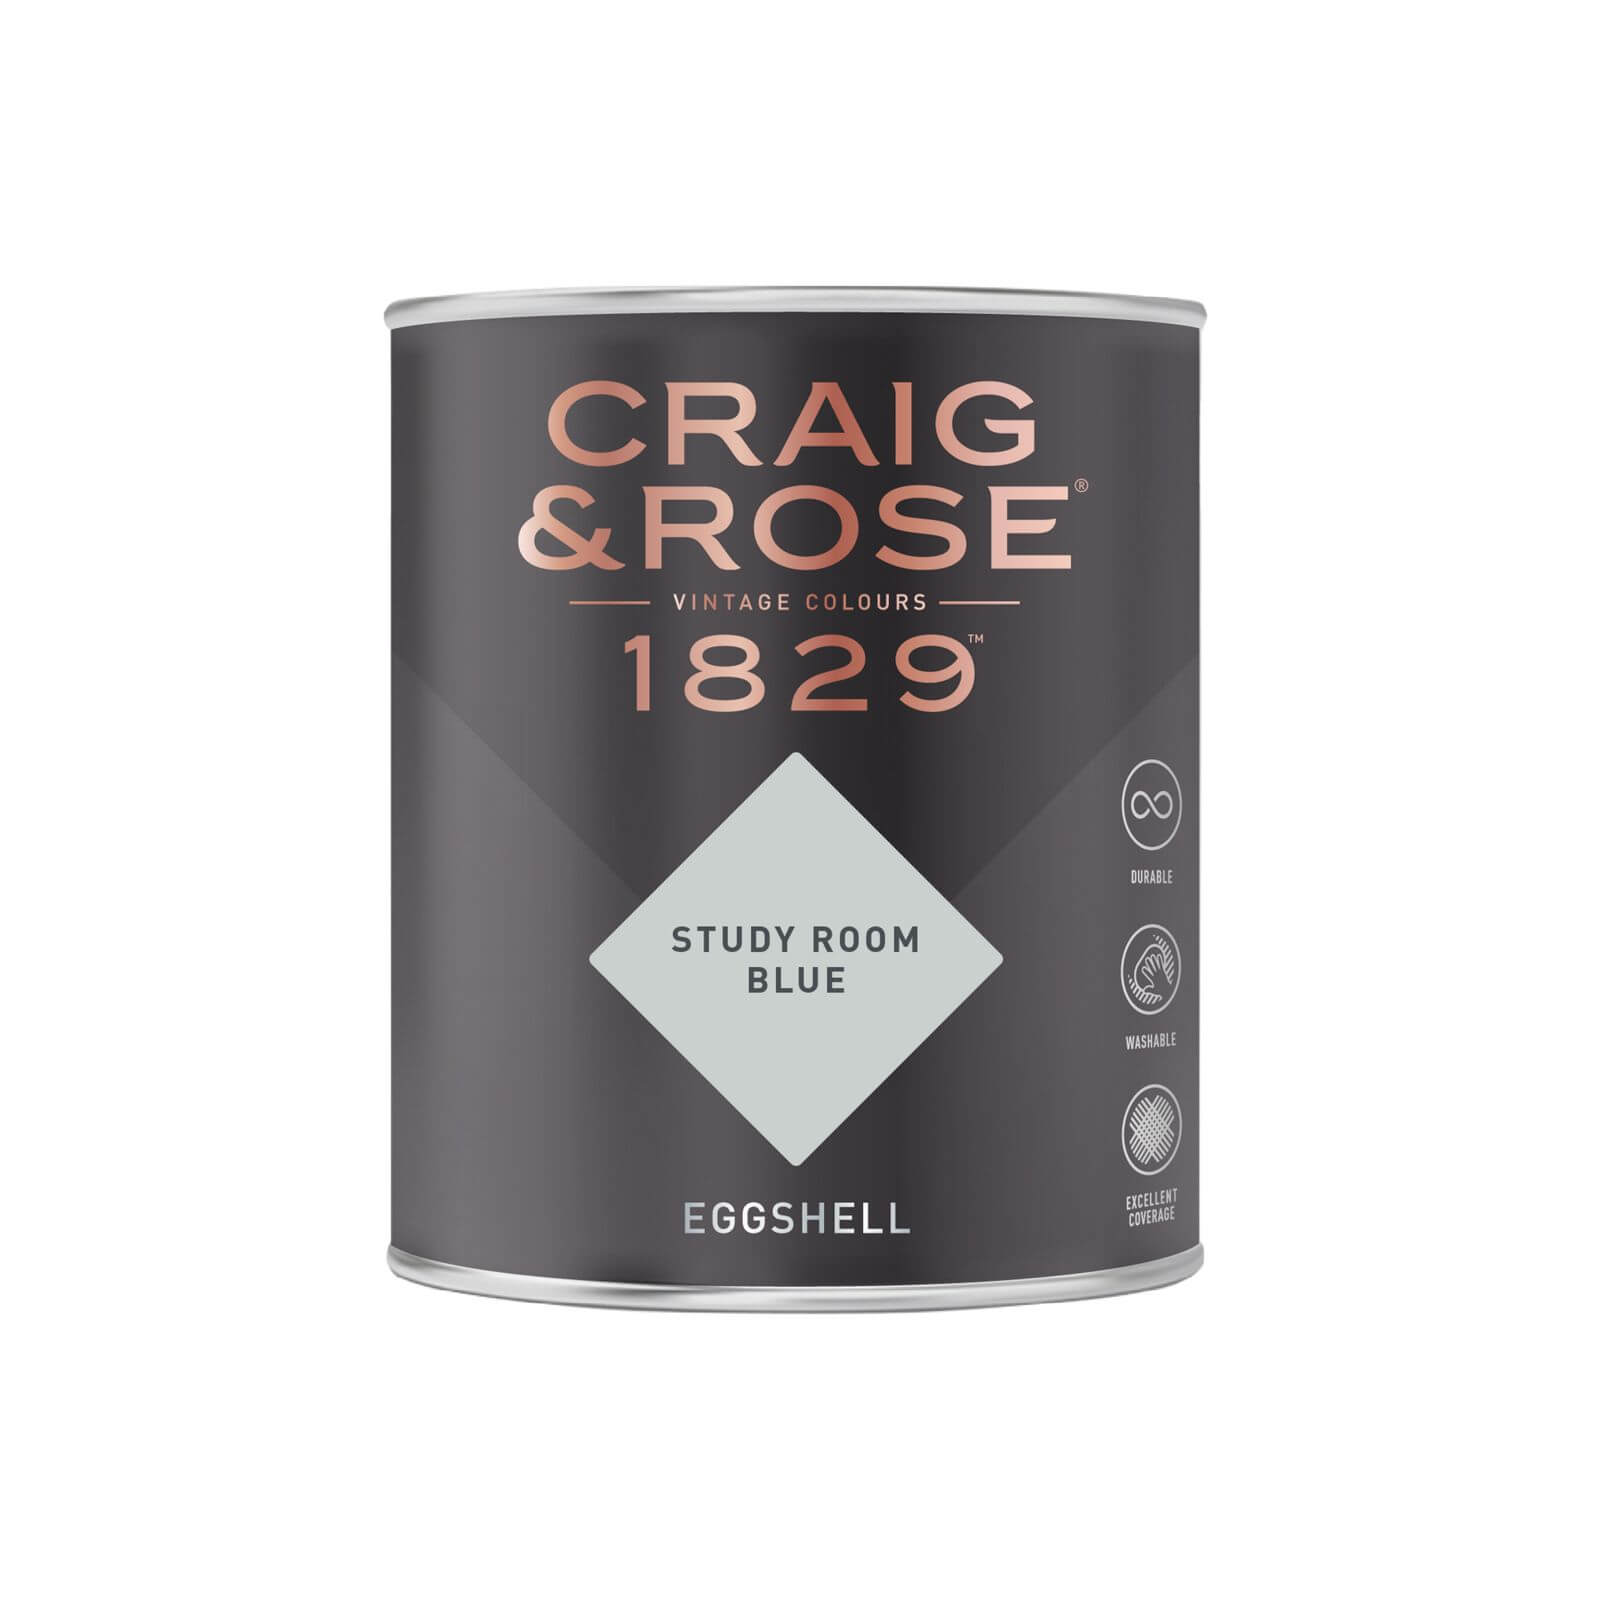 Craig & Rose 1829 Eggshell Paint Study Room Blue - 750ml